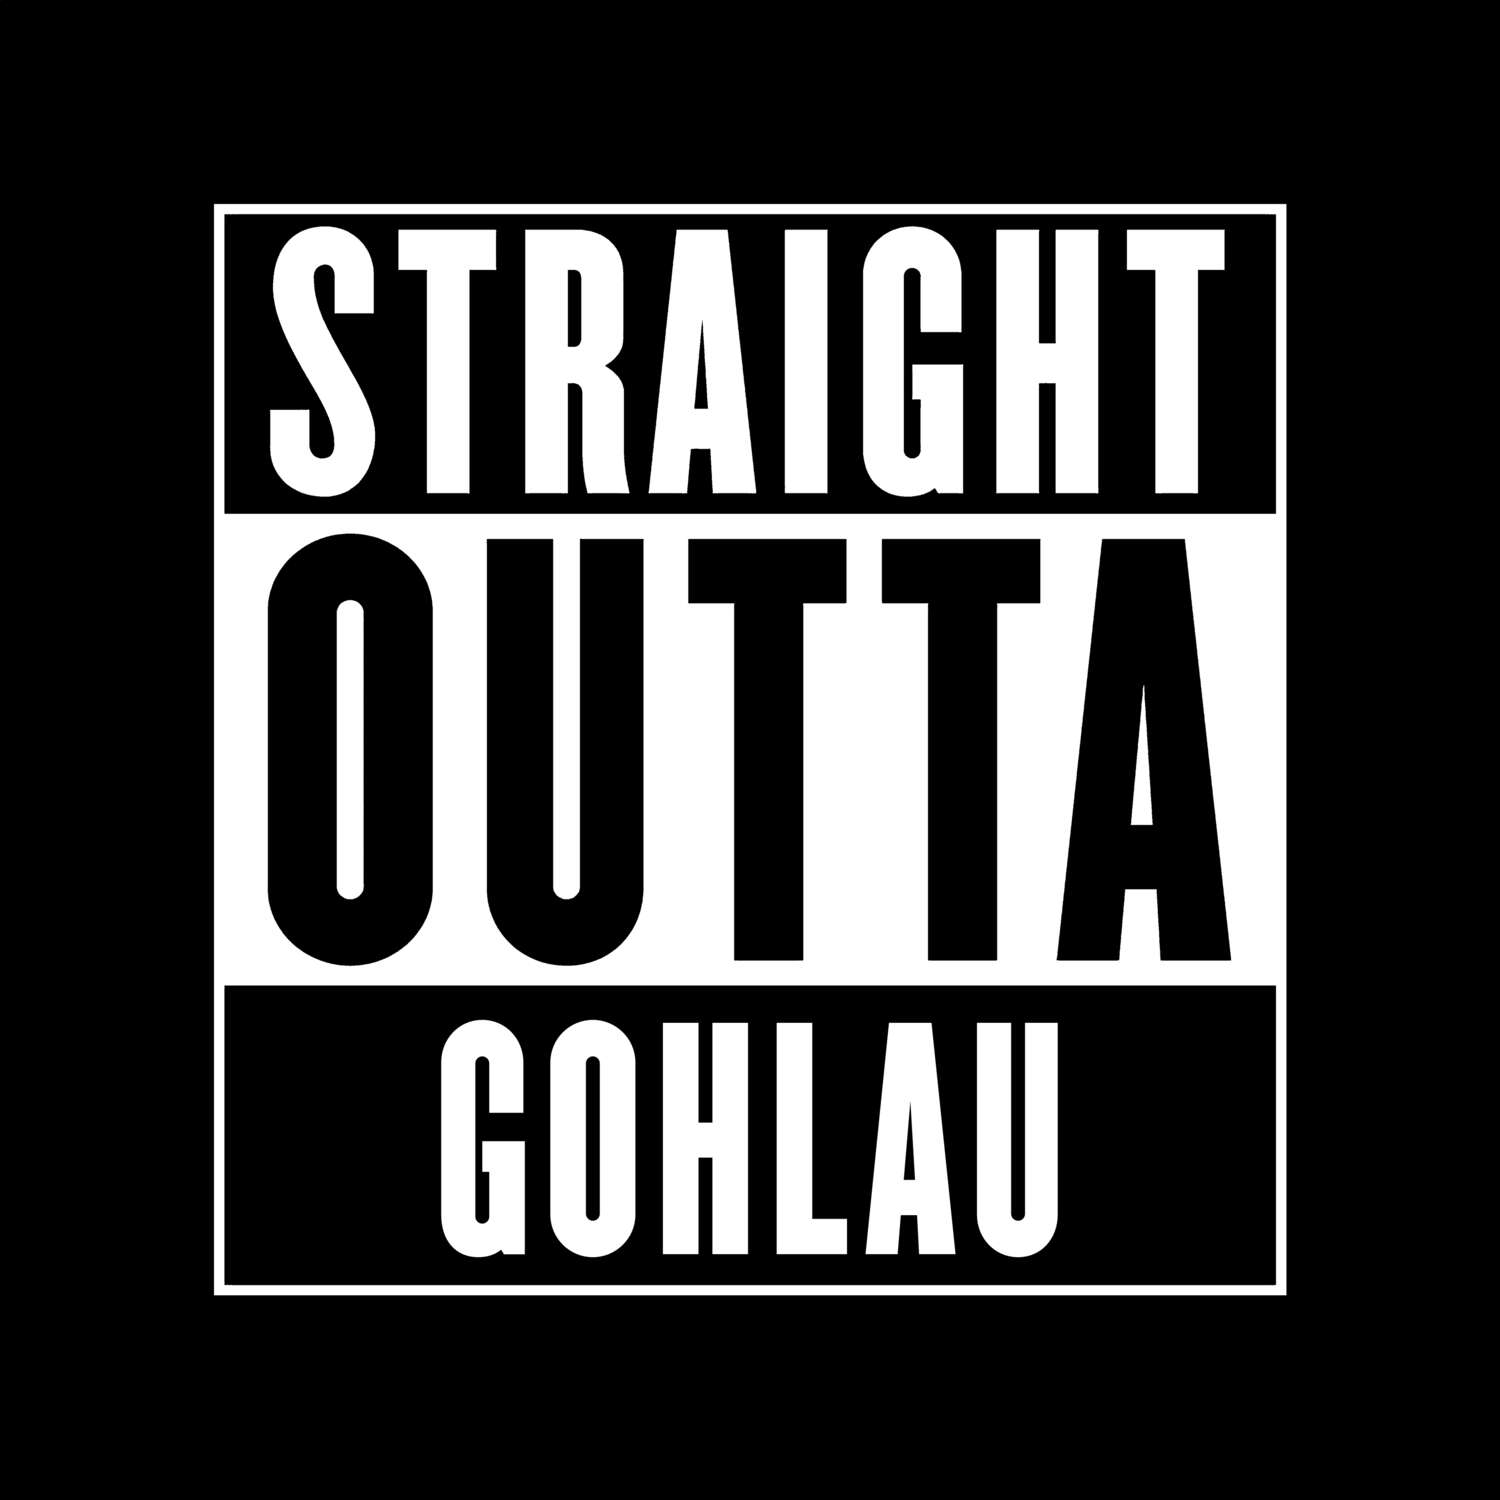 Gohlau T-Shirt »Straight Outta«